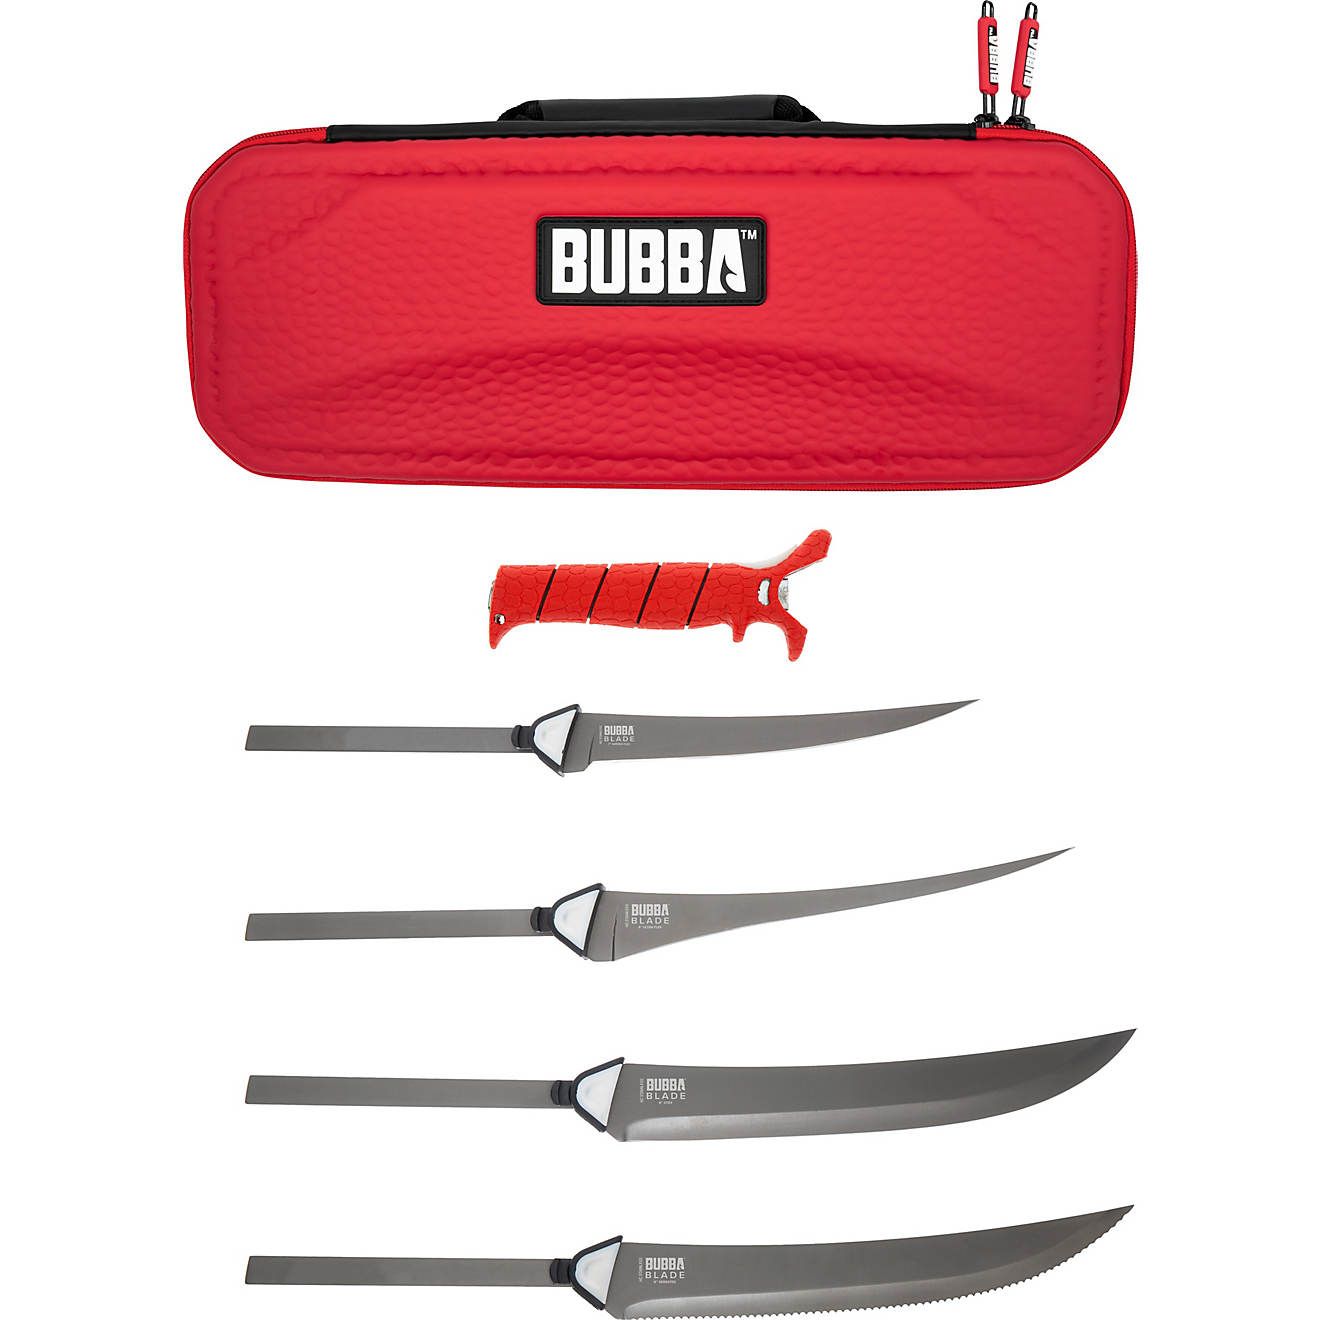 Bubba Multi-Flex Interchangeable 4-Blade Knife Set | Academy | Academy Sports + Outdoors